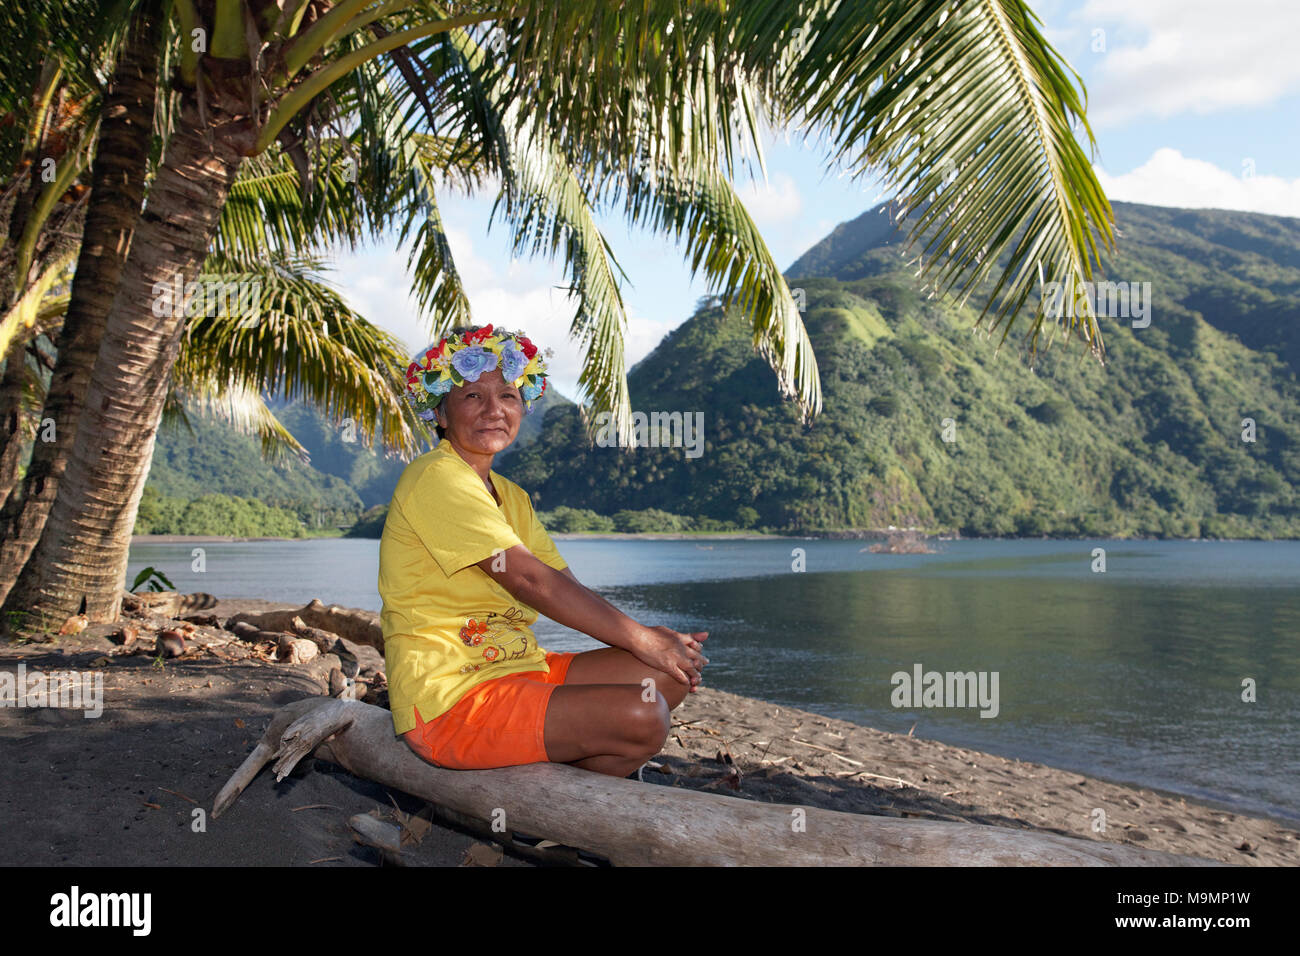 Old woman with wreath of flowers sitting under palm trees on tree trunk, coast near Taurita, Tahiti Iti, society islands Stock Photo